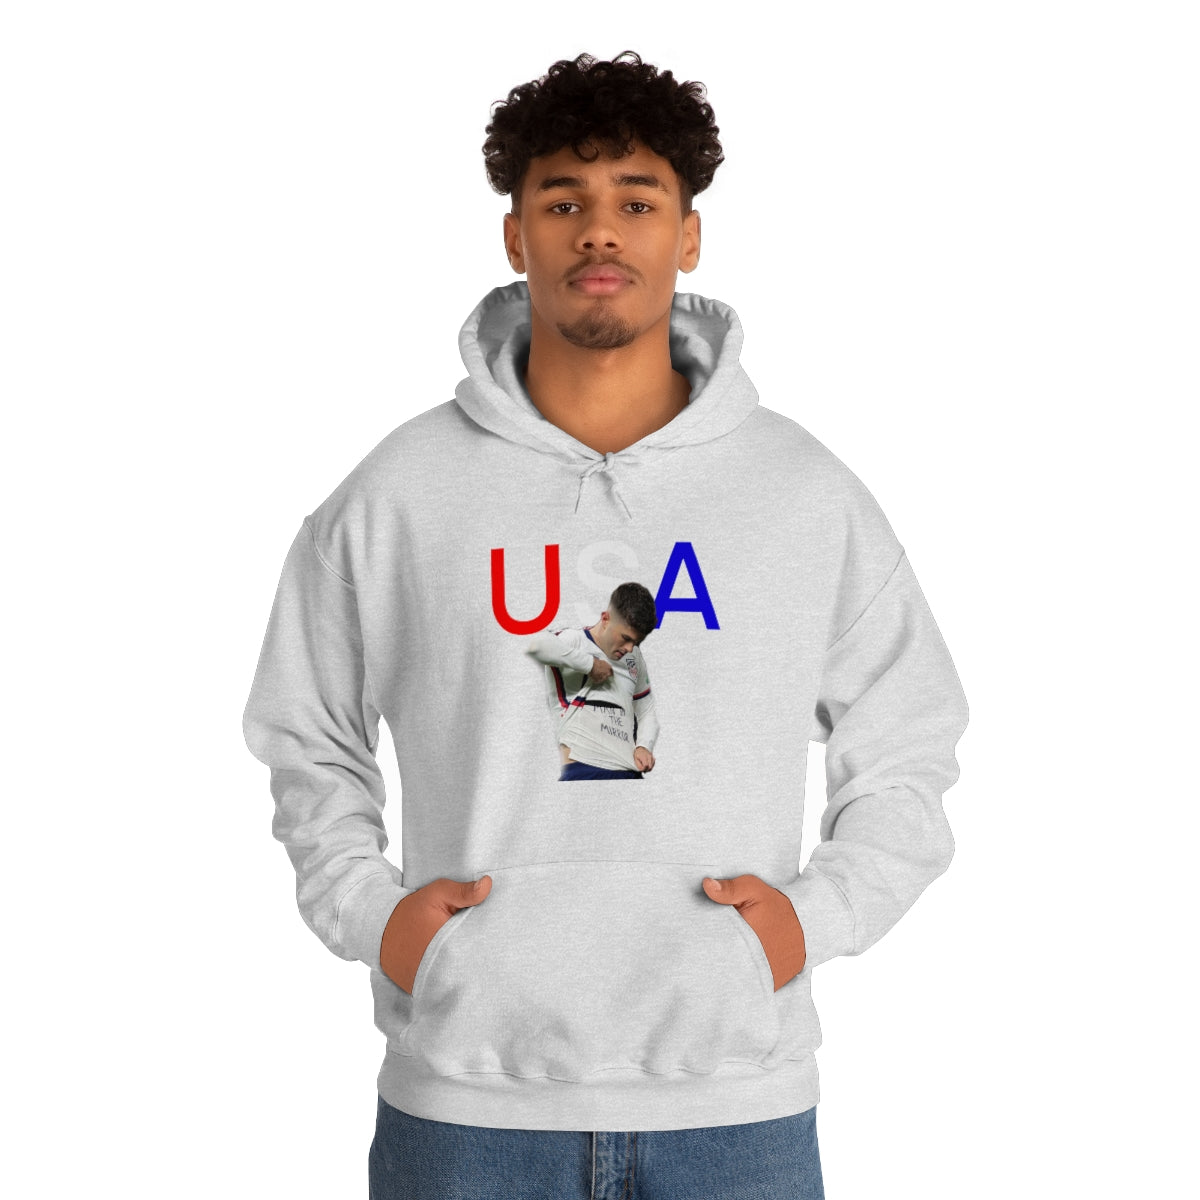 Christian Pulisic USA Soccer Man In The Mirror Sweatshirt - IsGoodBrand